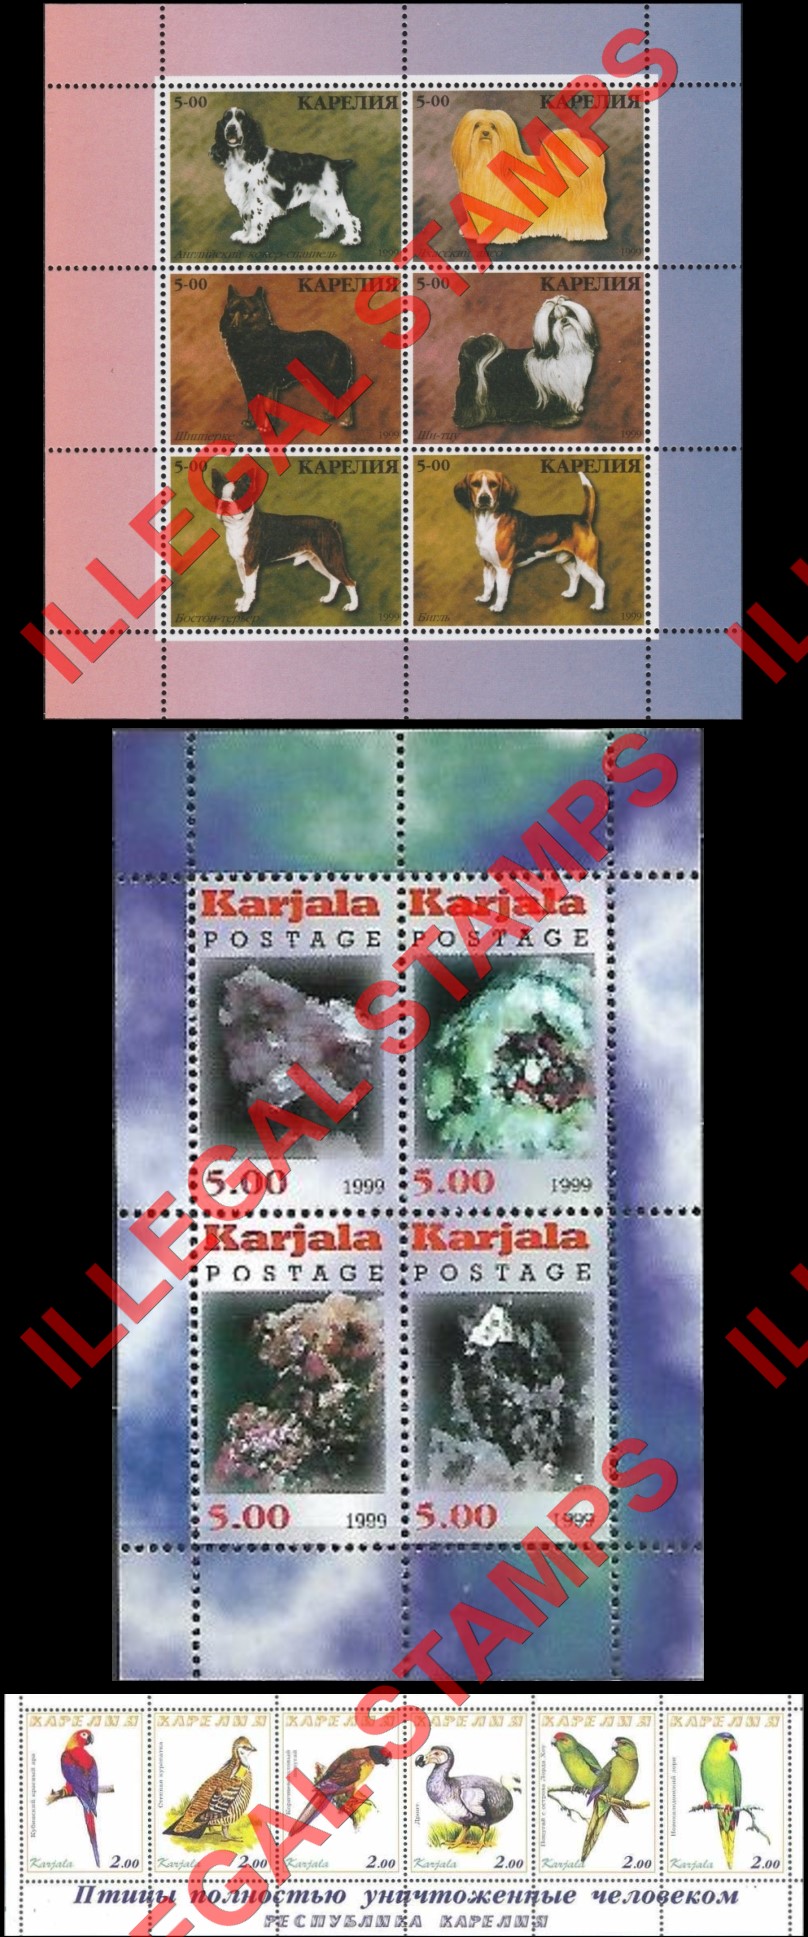 Karjala 1999 Illegal Stamps (Part 2)